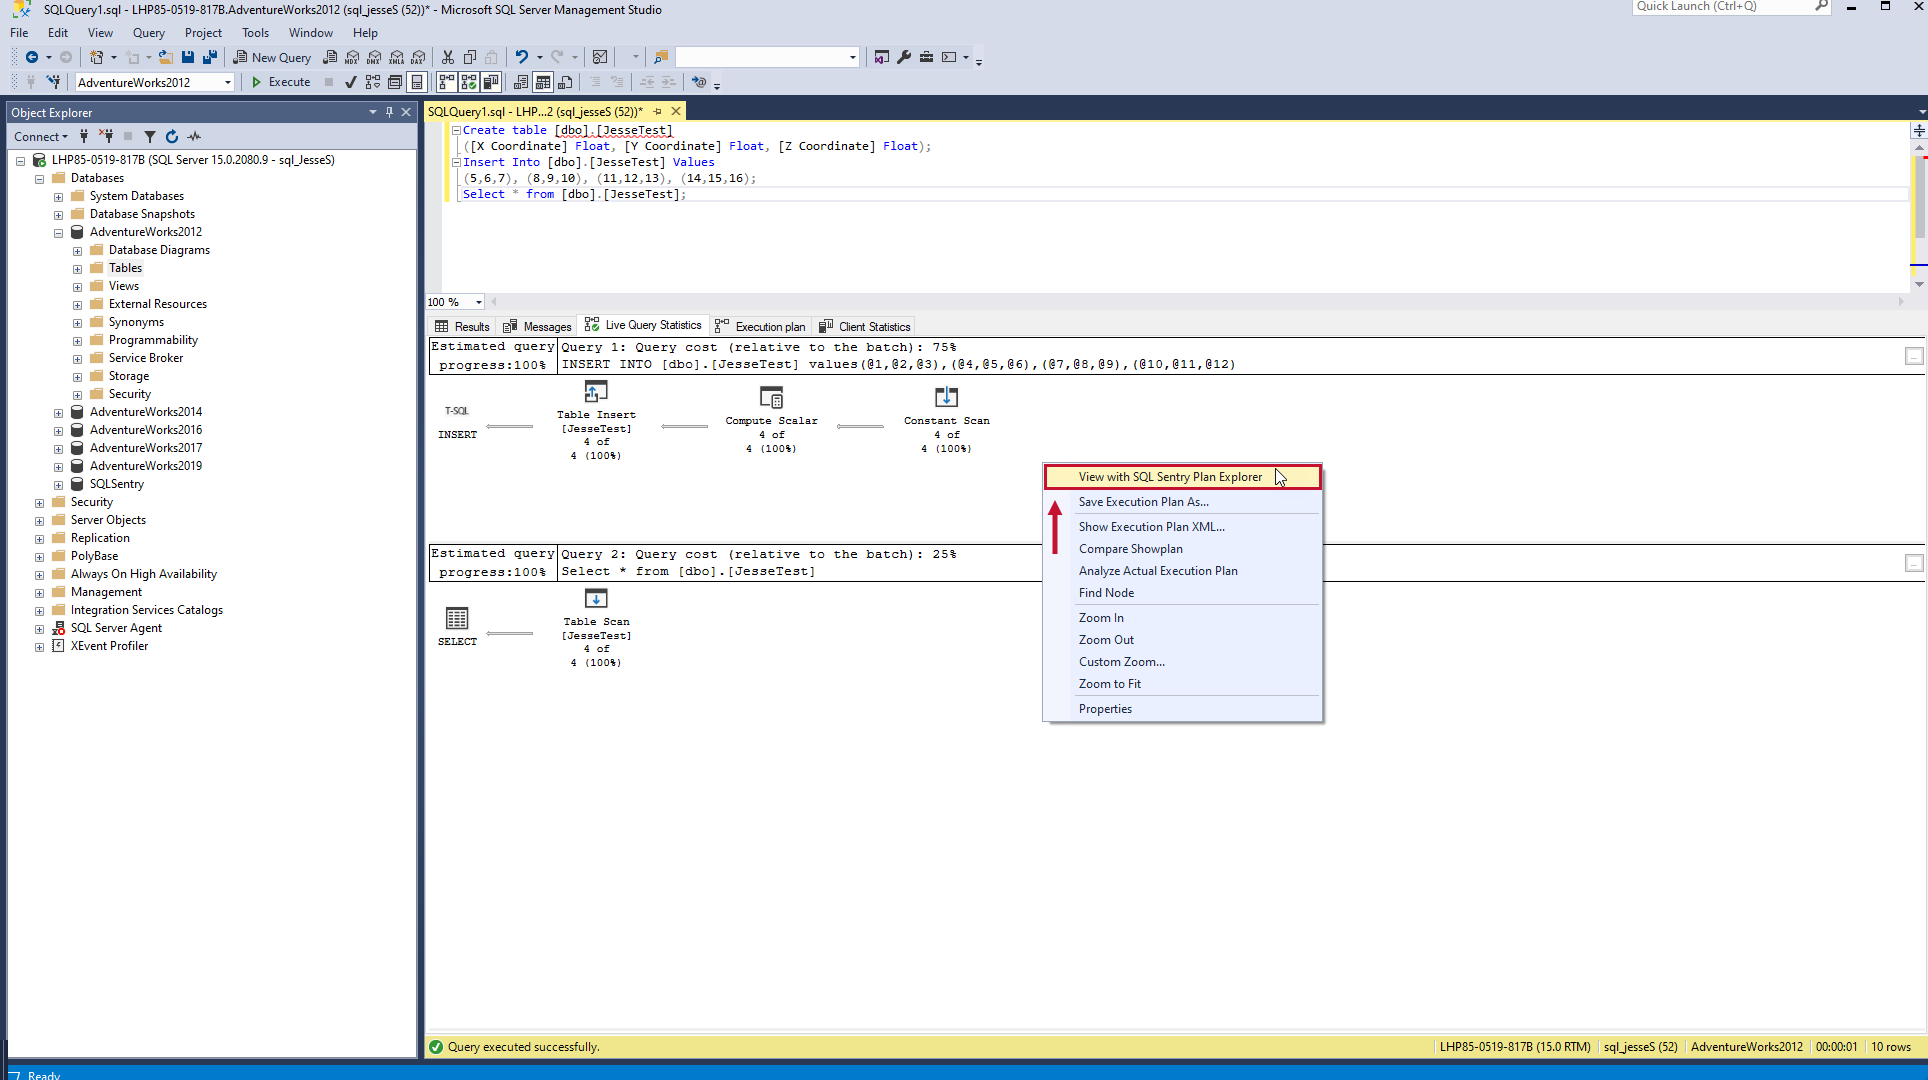 SQL Sentry Plan Explorer SSMS View with SQL Sentry Plan Explorer context menu